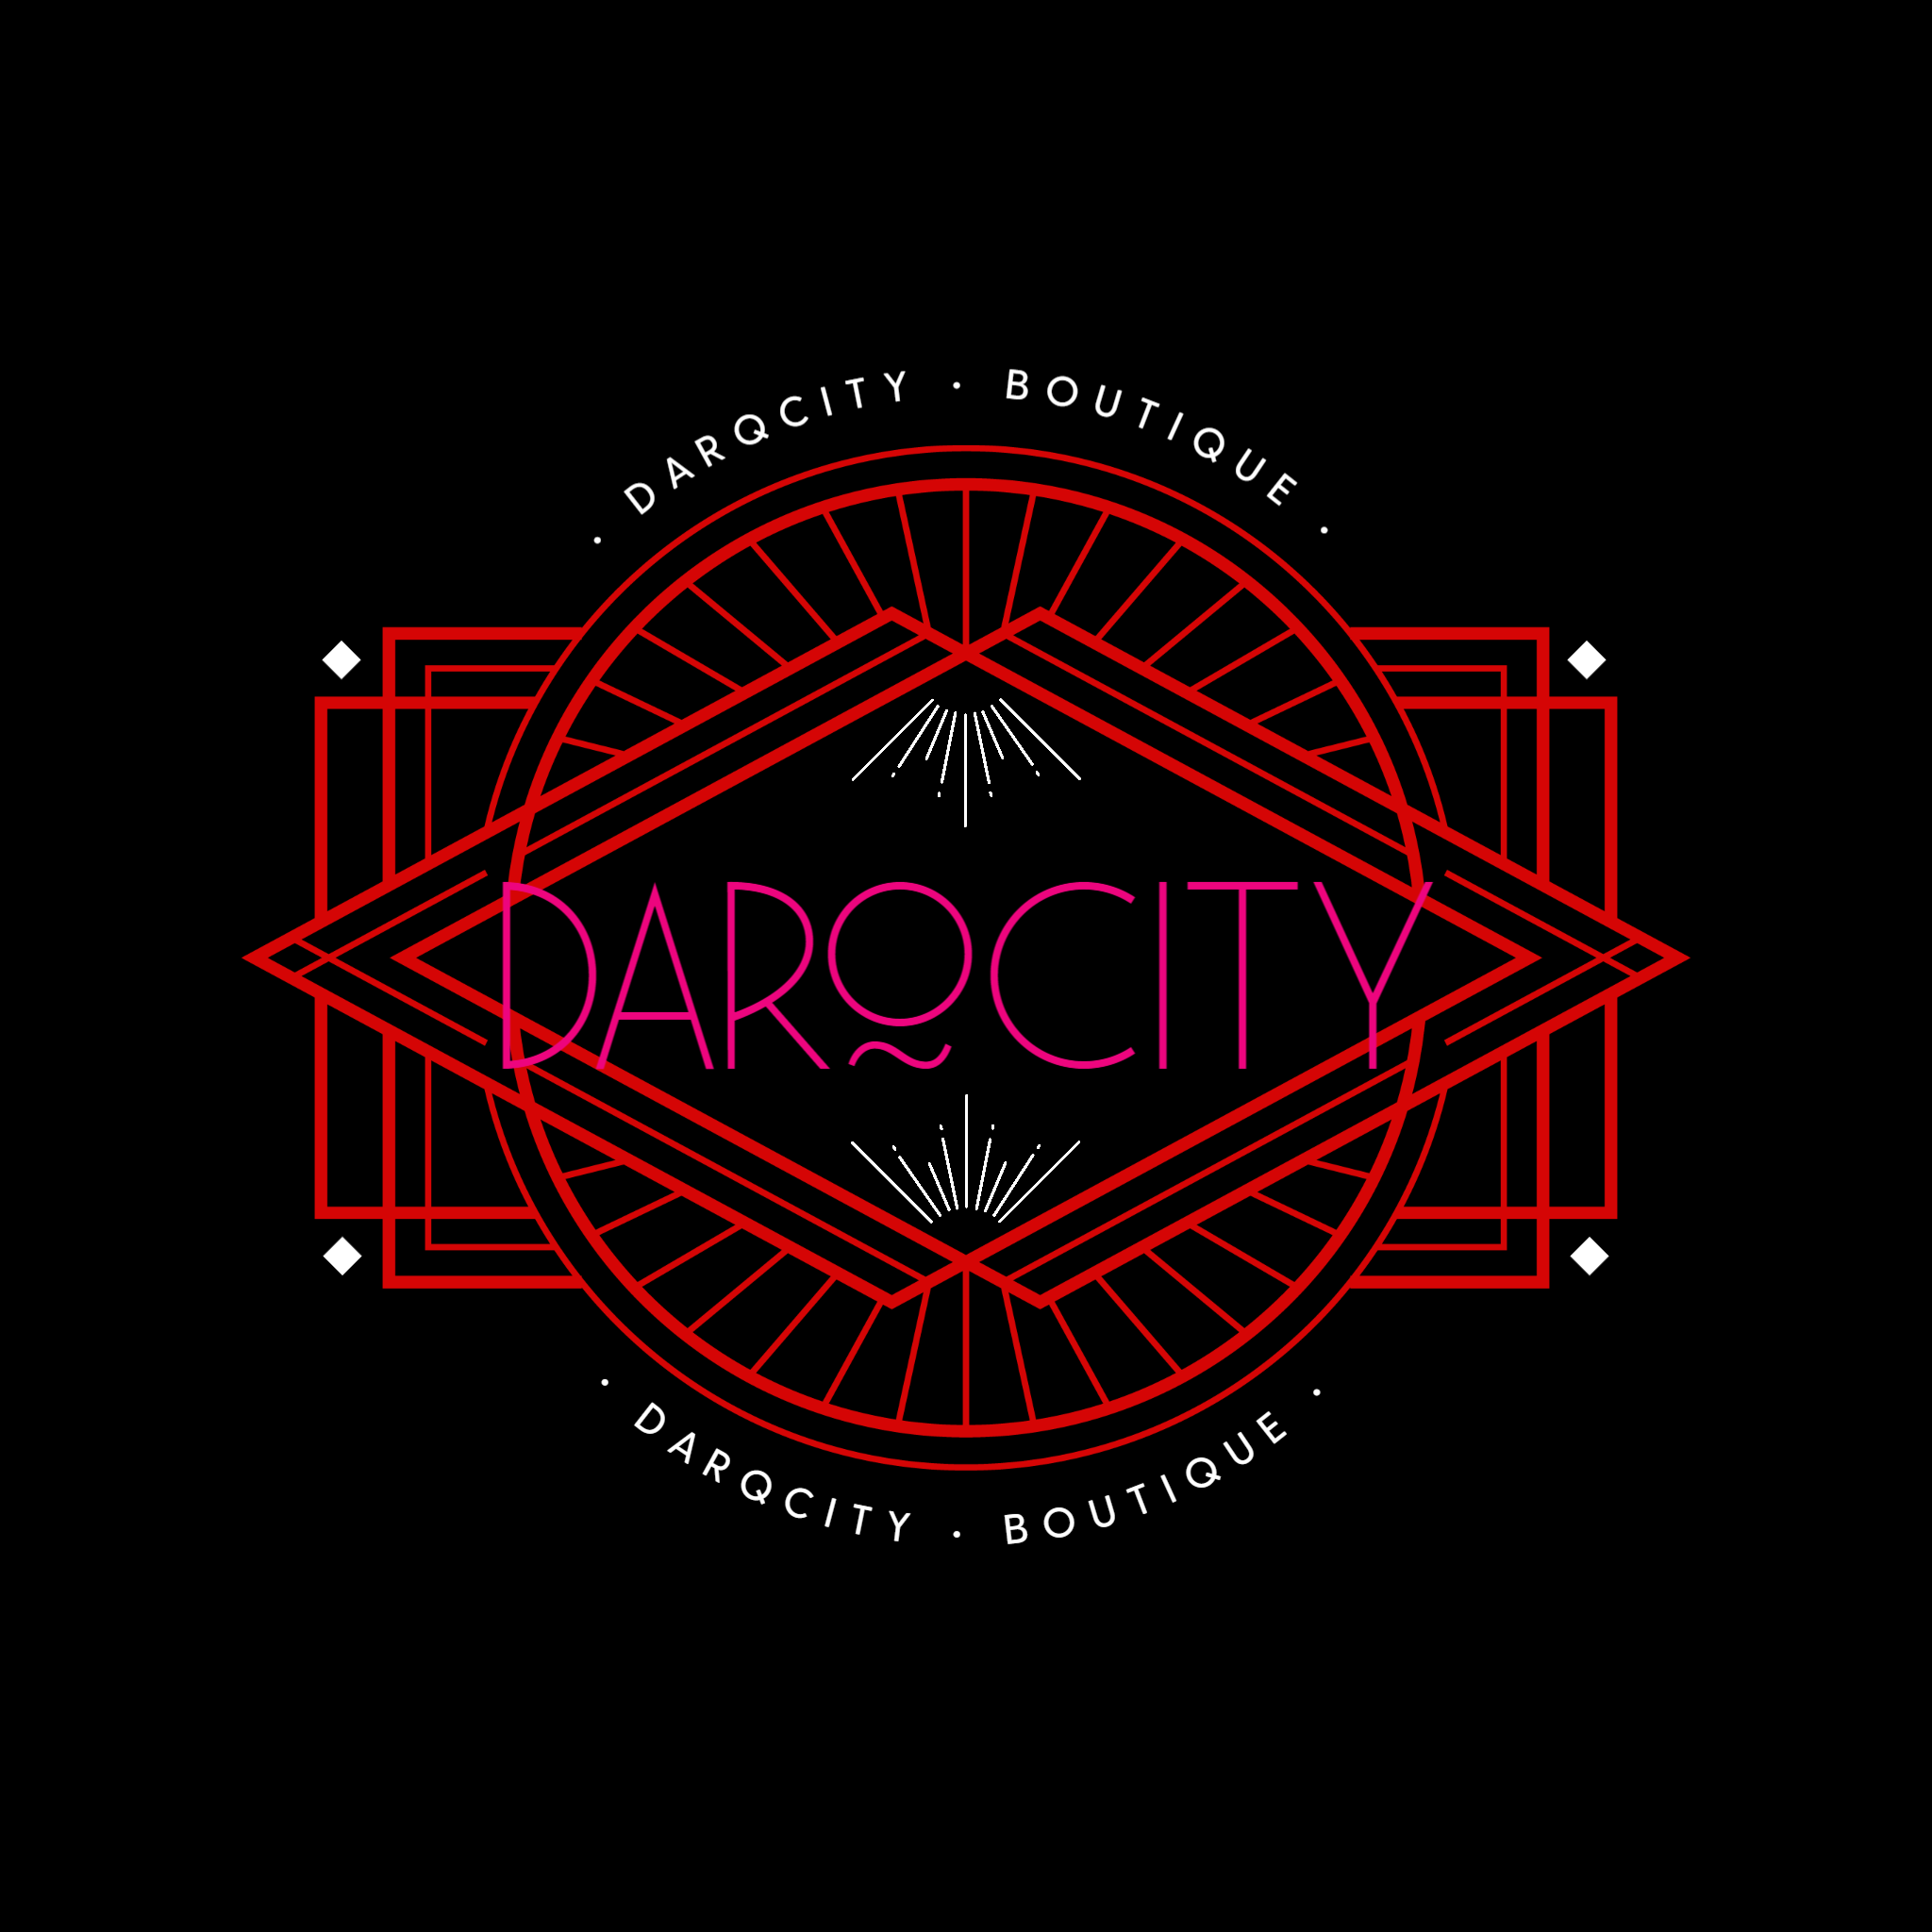 Darqcityboutique – darqcityboutiqueNC.US